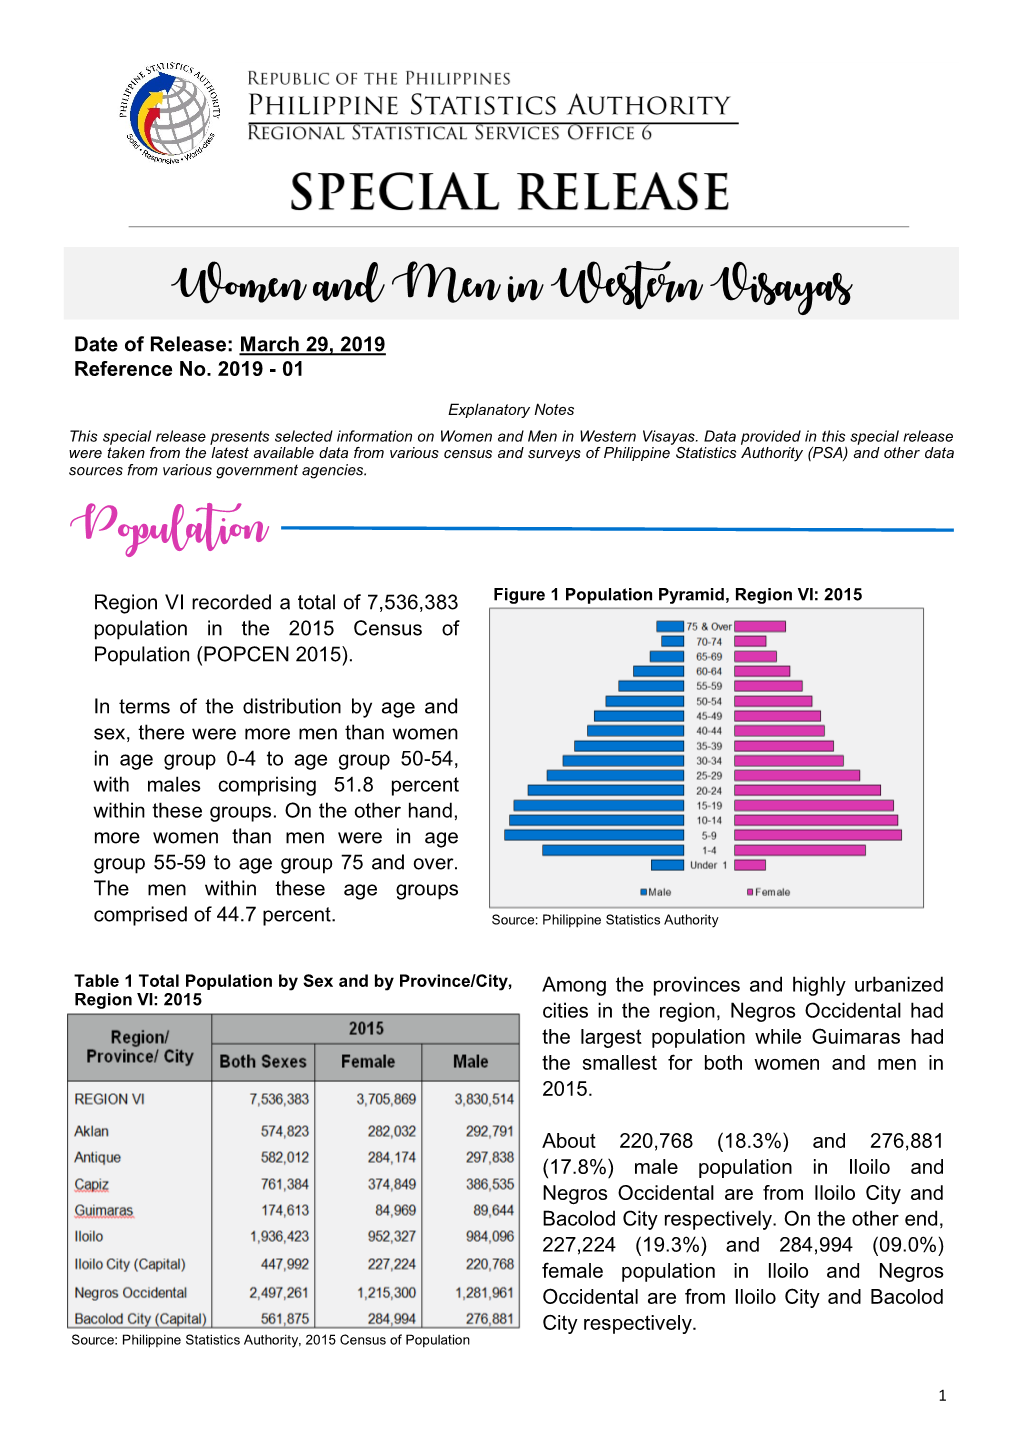 Women and Men in Western Visayas Population